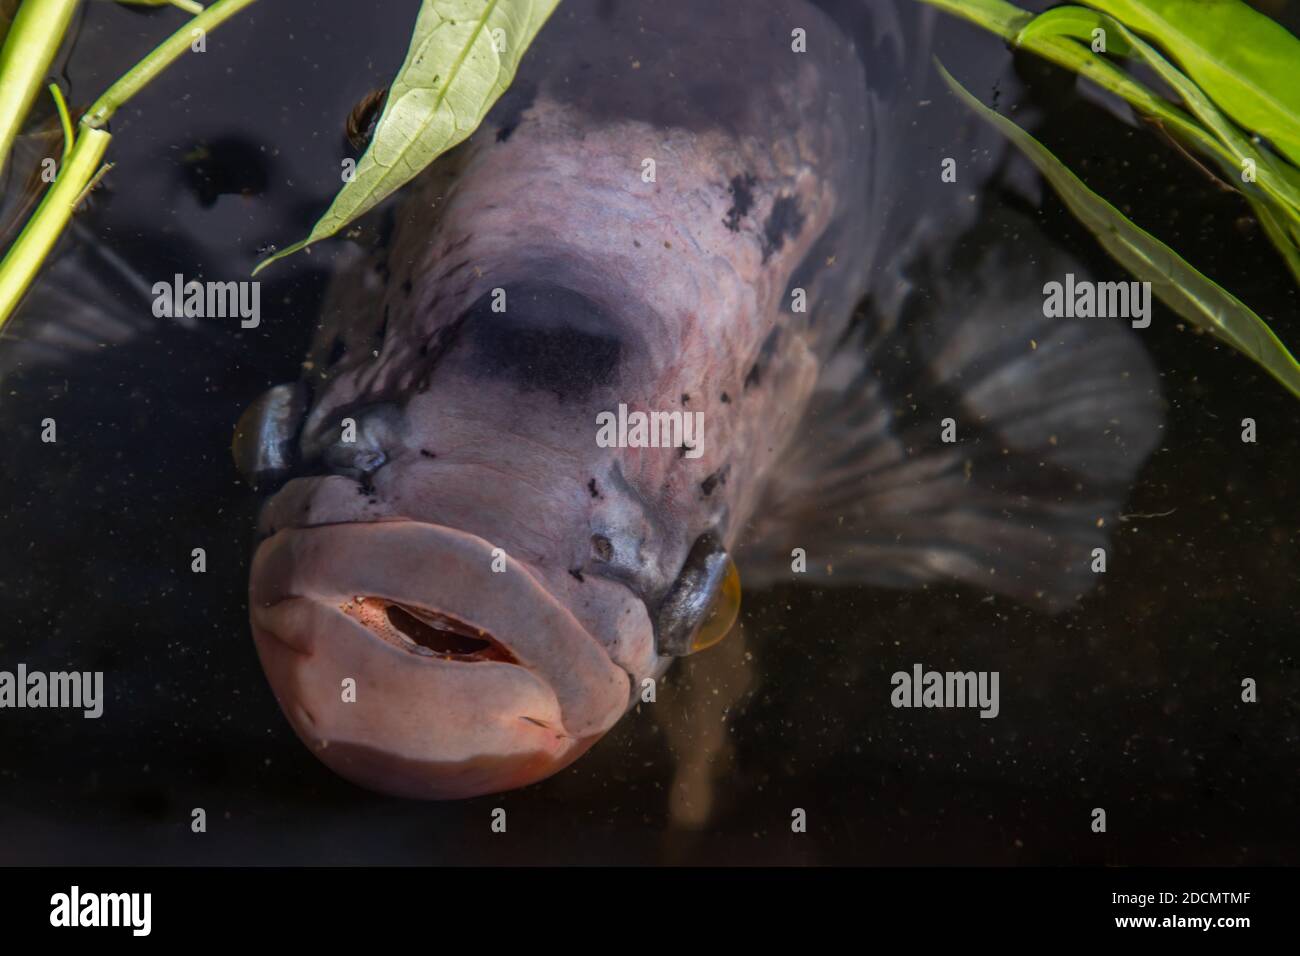 Closeup freshwater fish Osphronemus goramy or Giant gourami fish in water. Selective focus, Motion blur image. Stock Photo